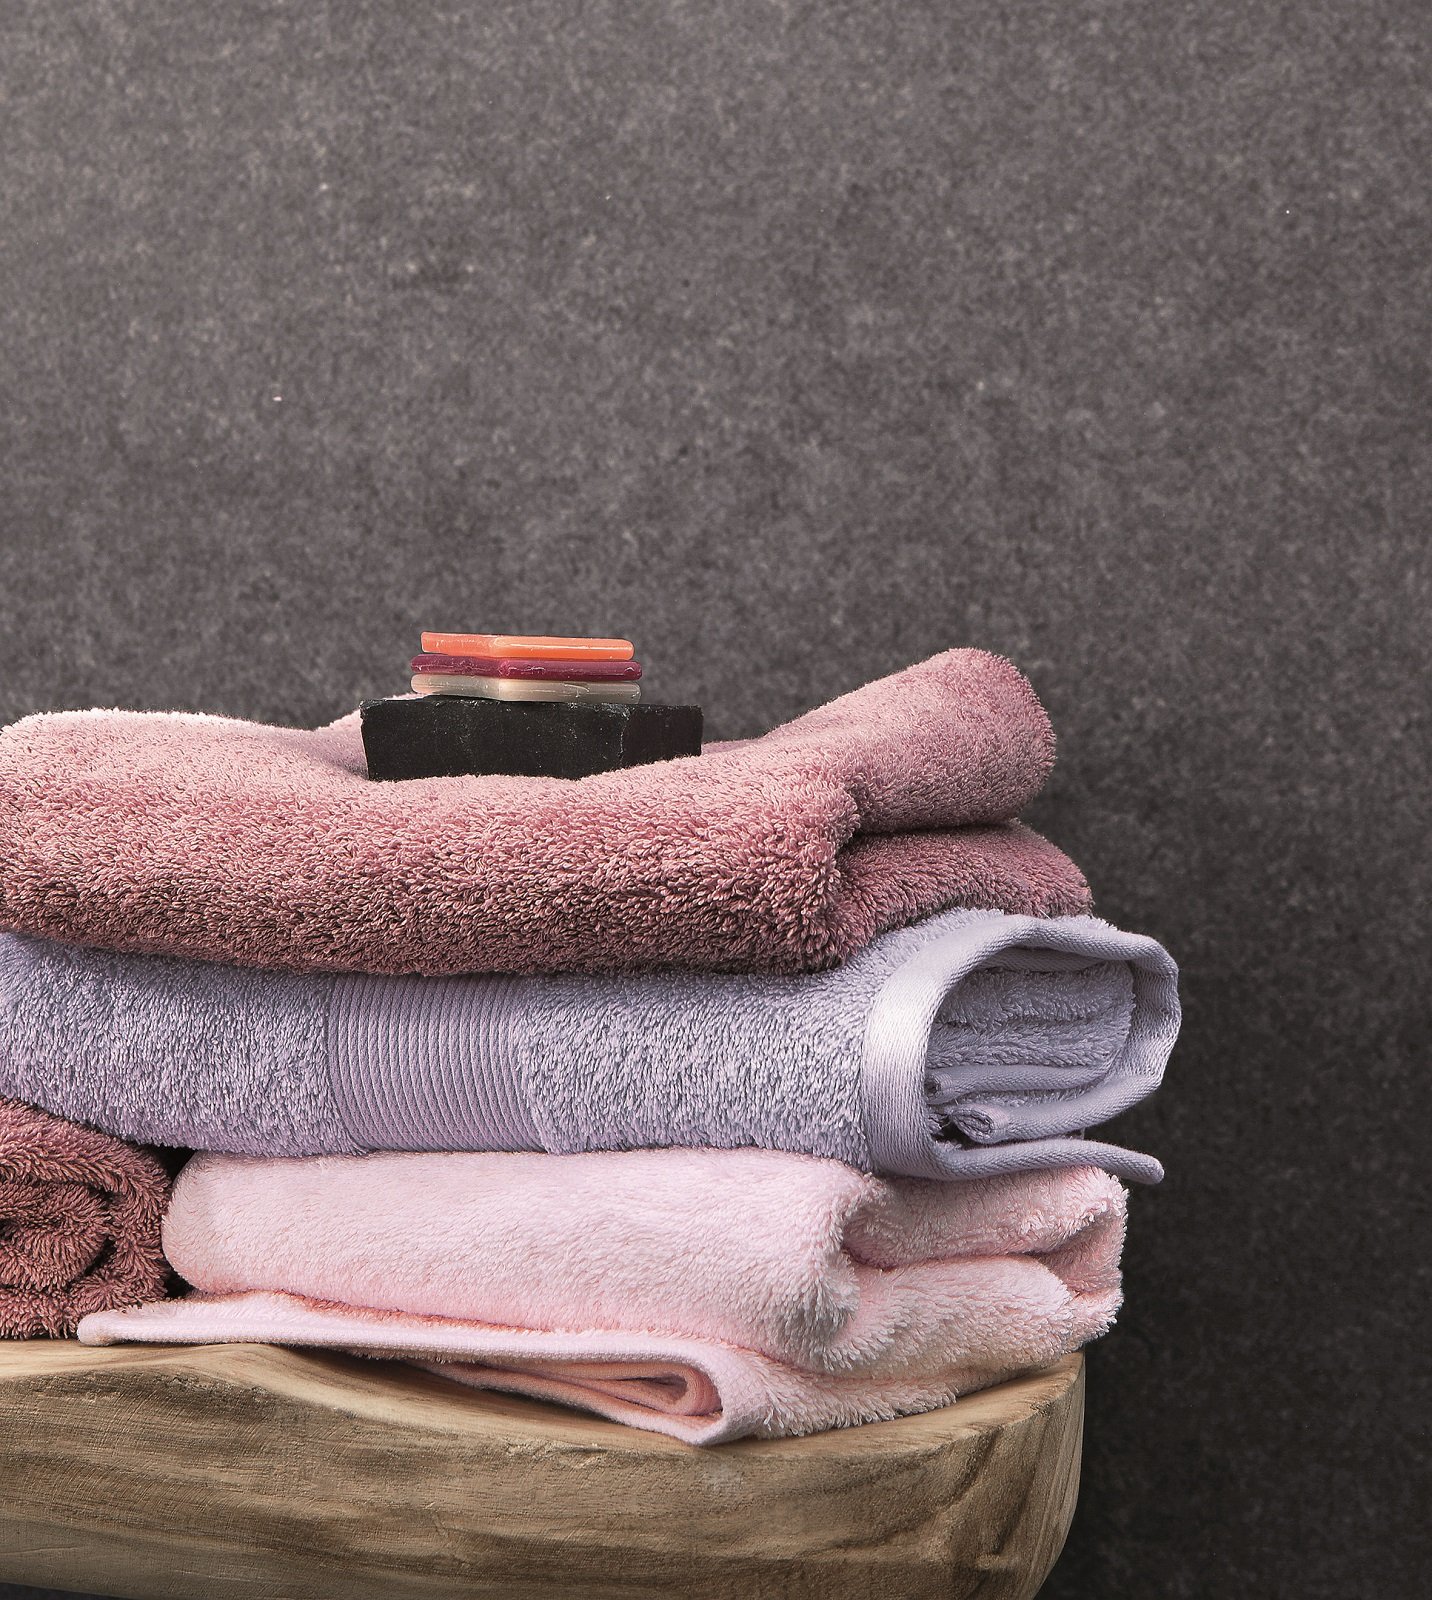 Asciugamani e biancheria da bagno: modelli, tipologie e foto - Cose di Casa